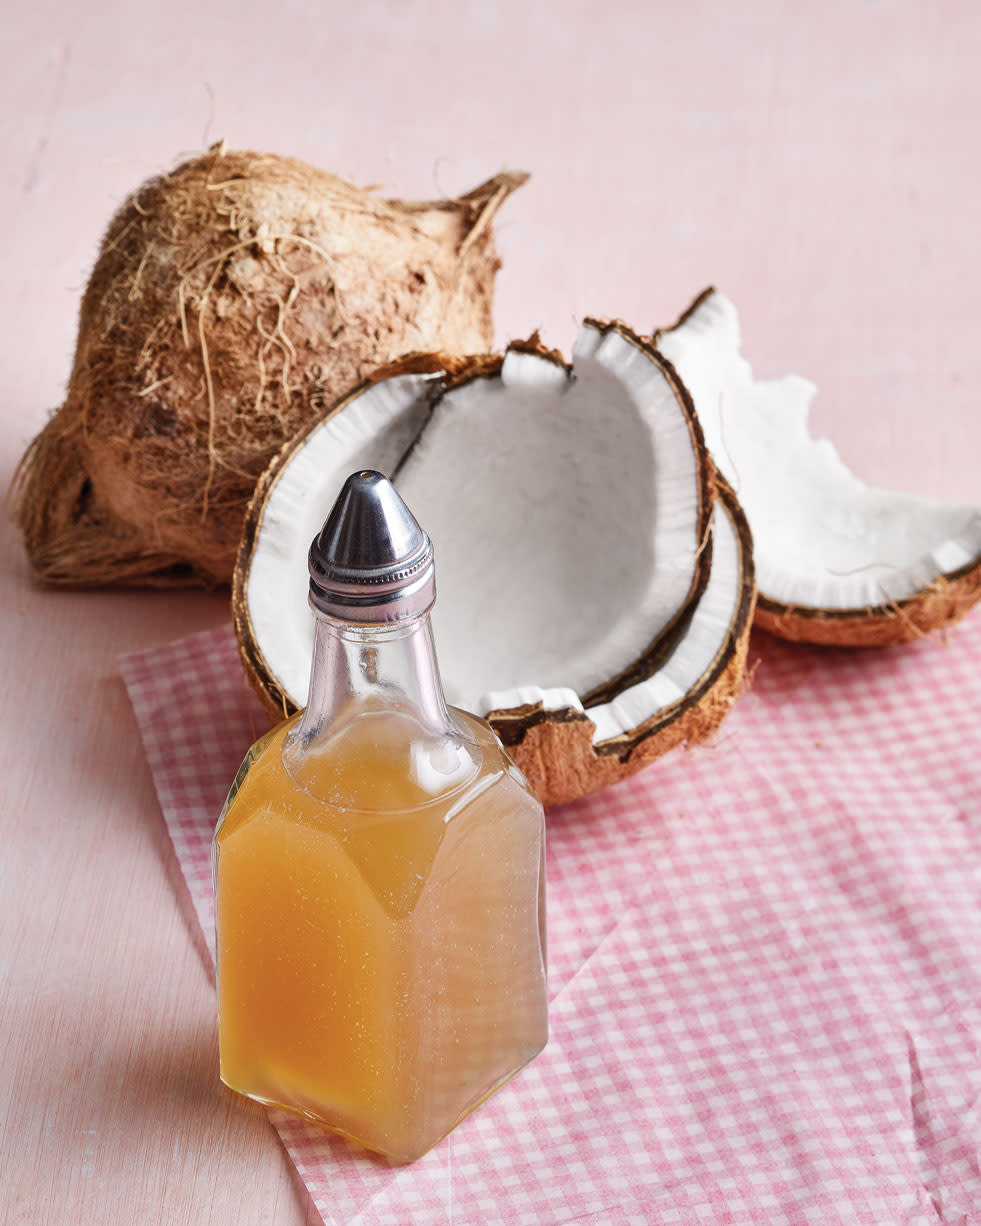 What is Coconut Vinegar?